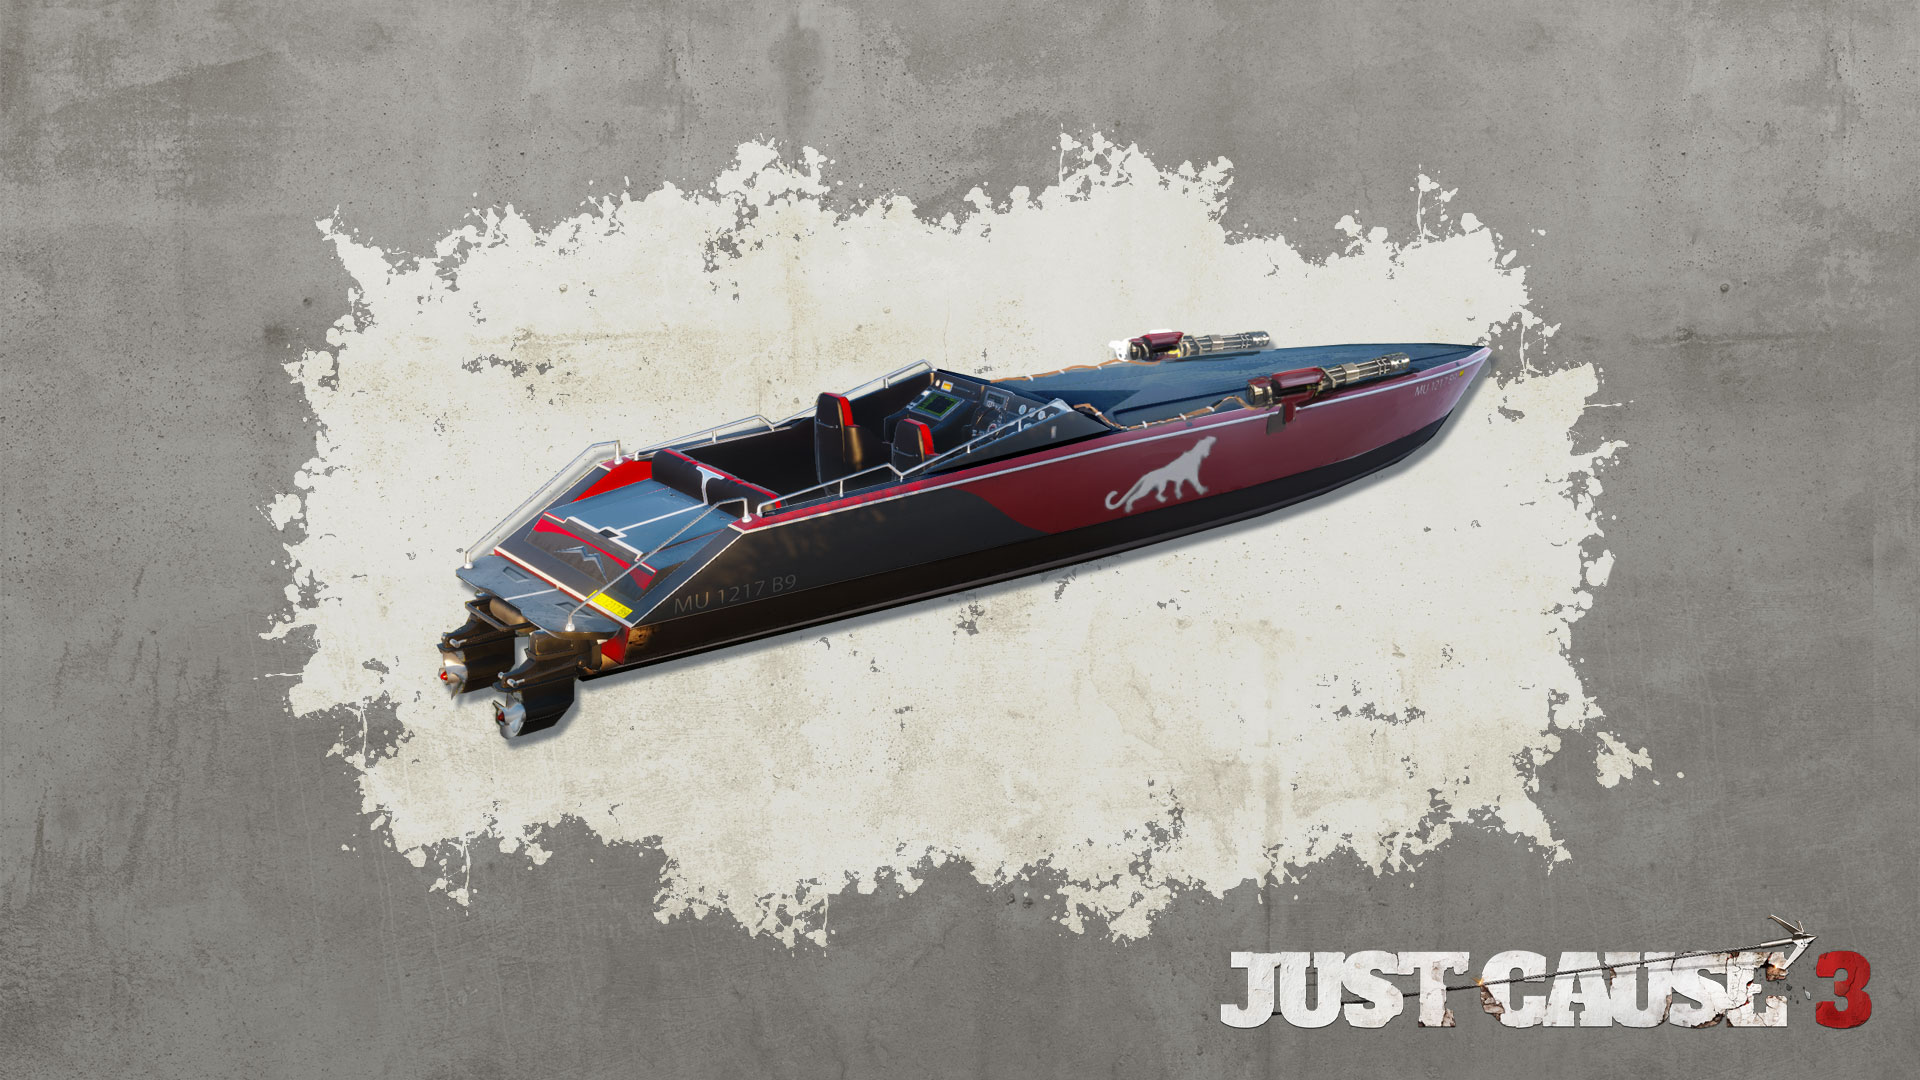 Just Cause 3 - Mini-Gun Racing Boat DLC Steam CD Key 1.56 usd